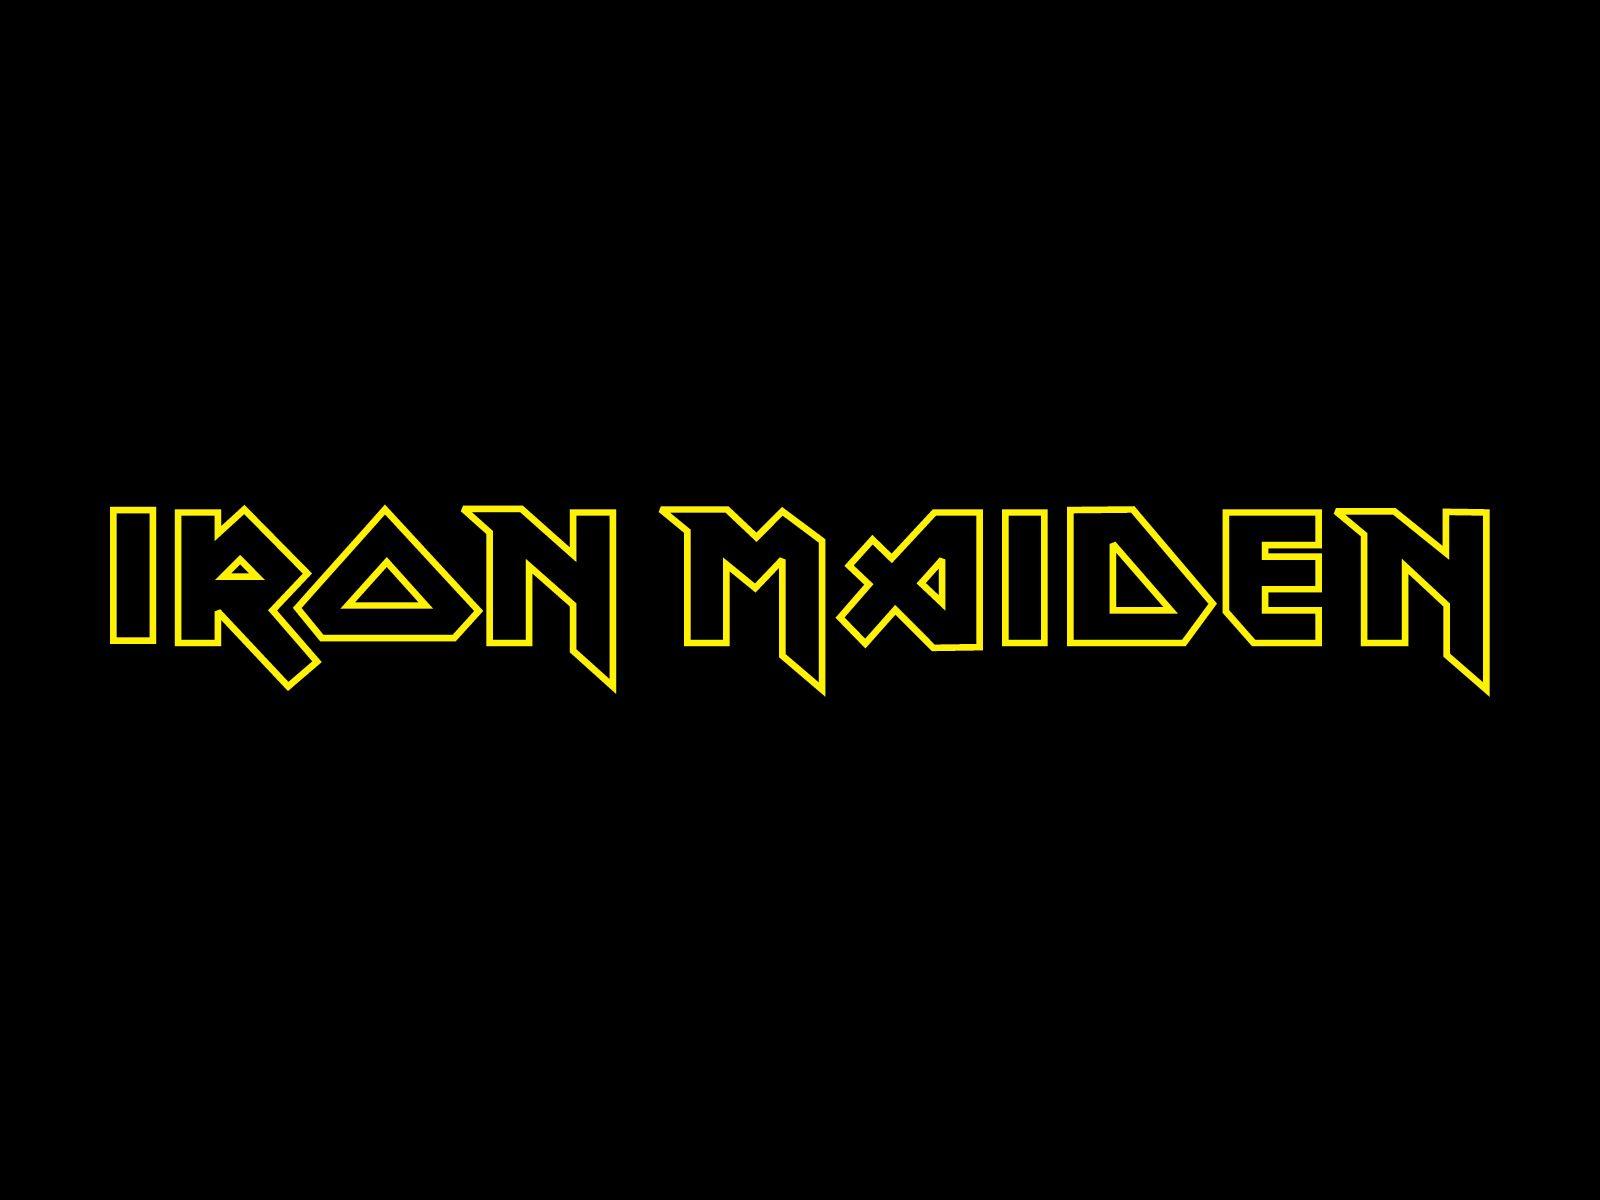 Iron Maiden wallpaper. Band logos band logos, metal bands